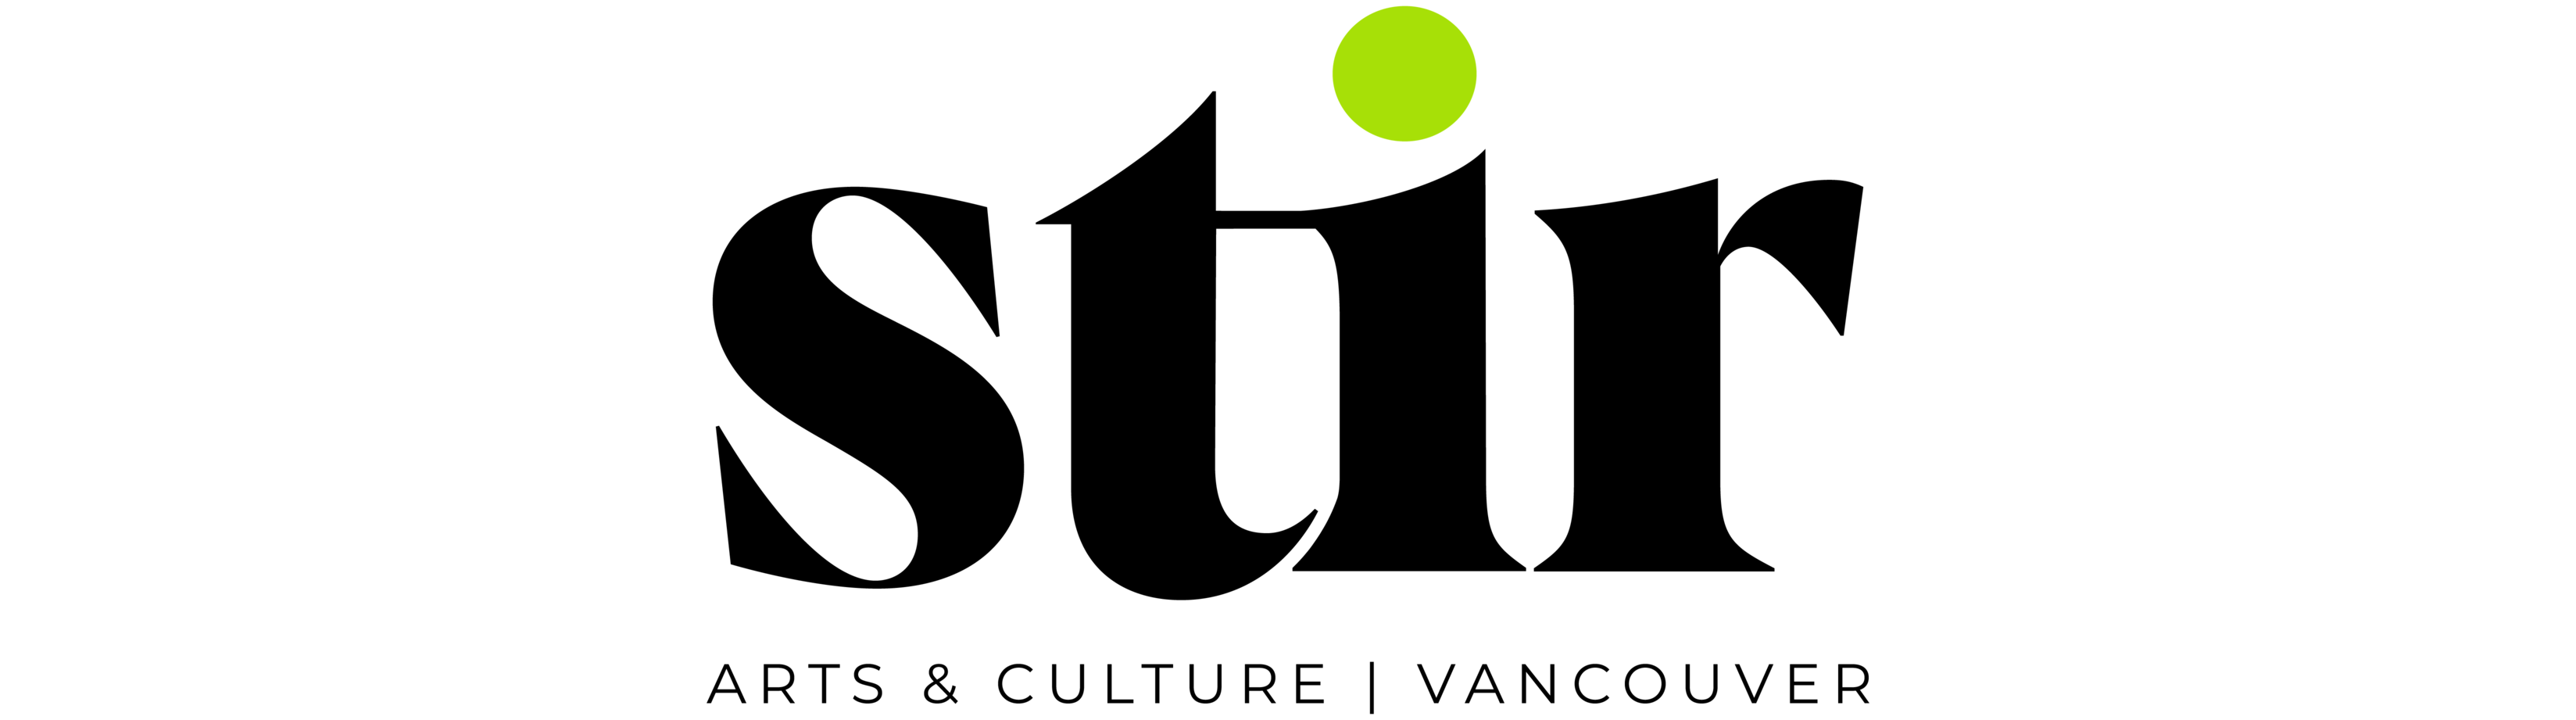 Stir Logo [Resize]